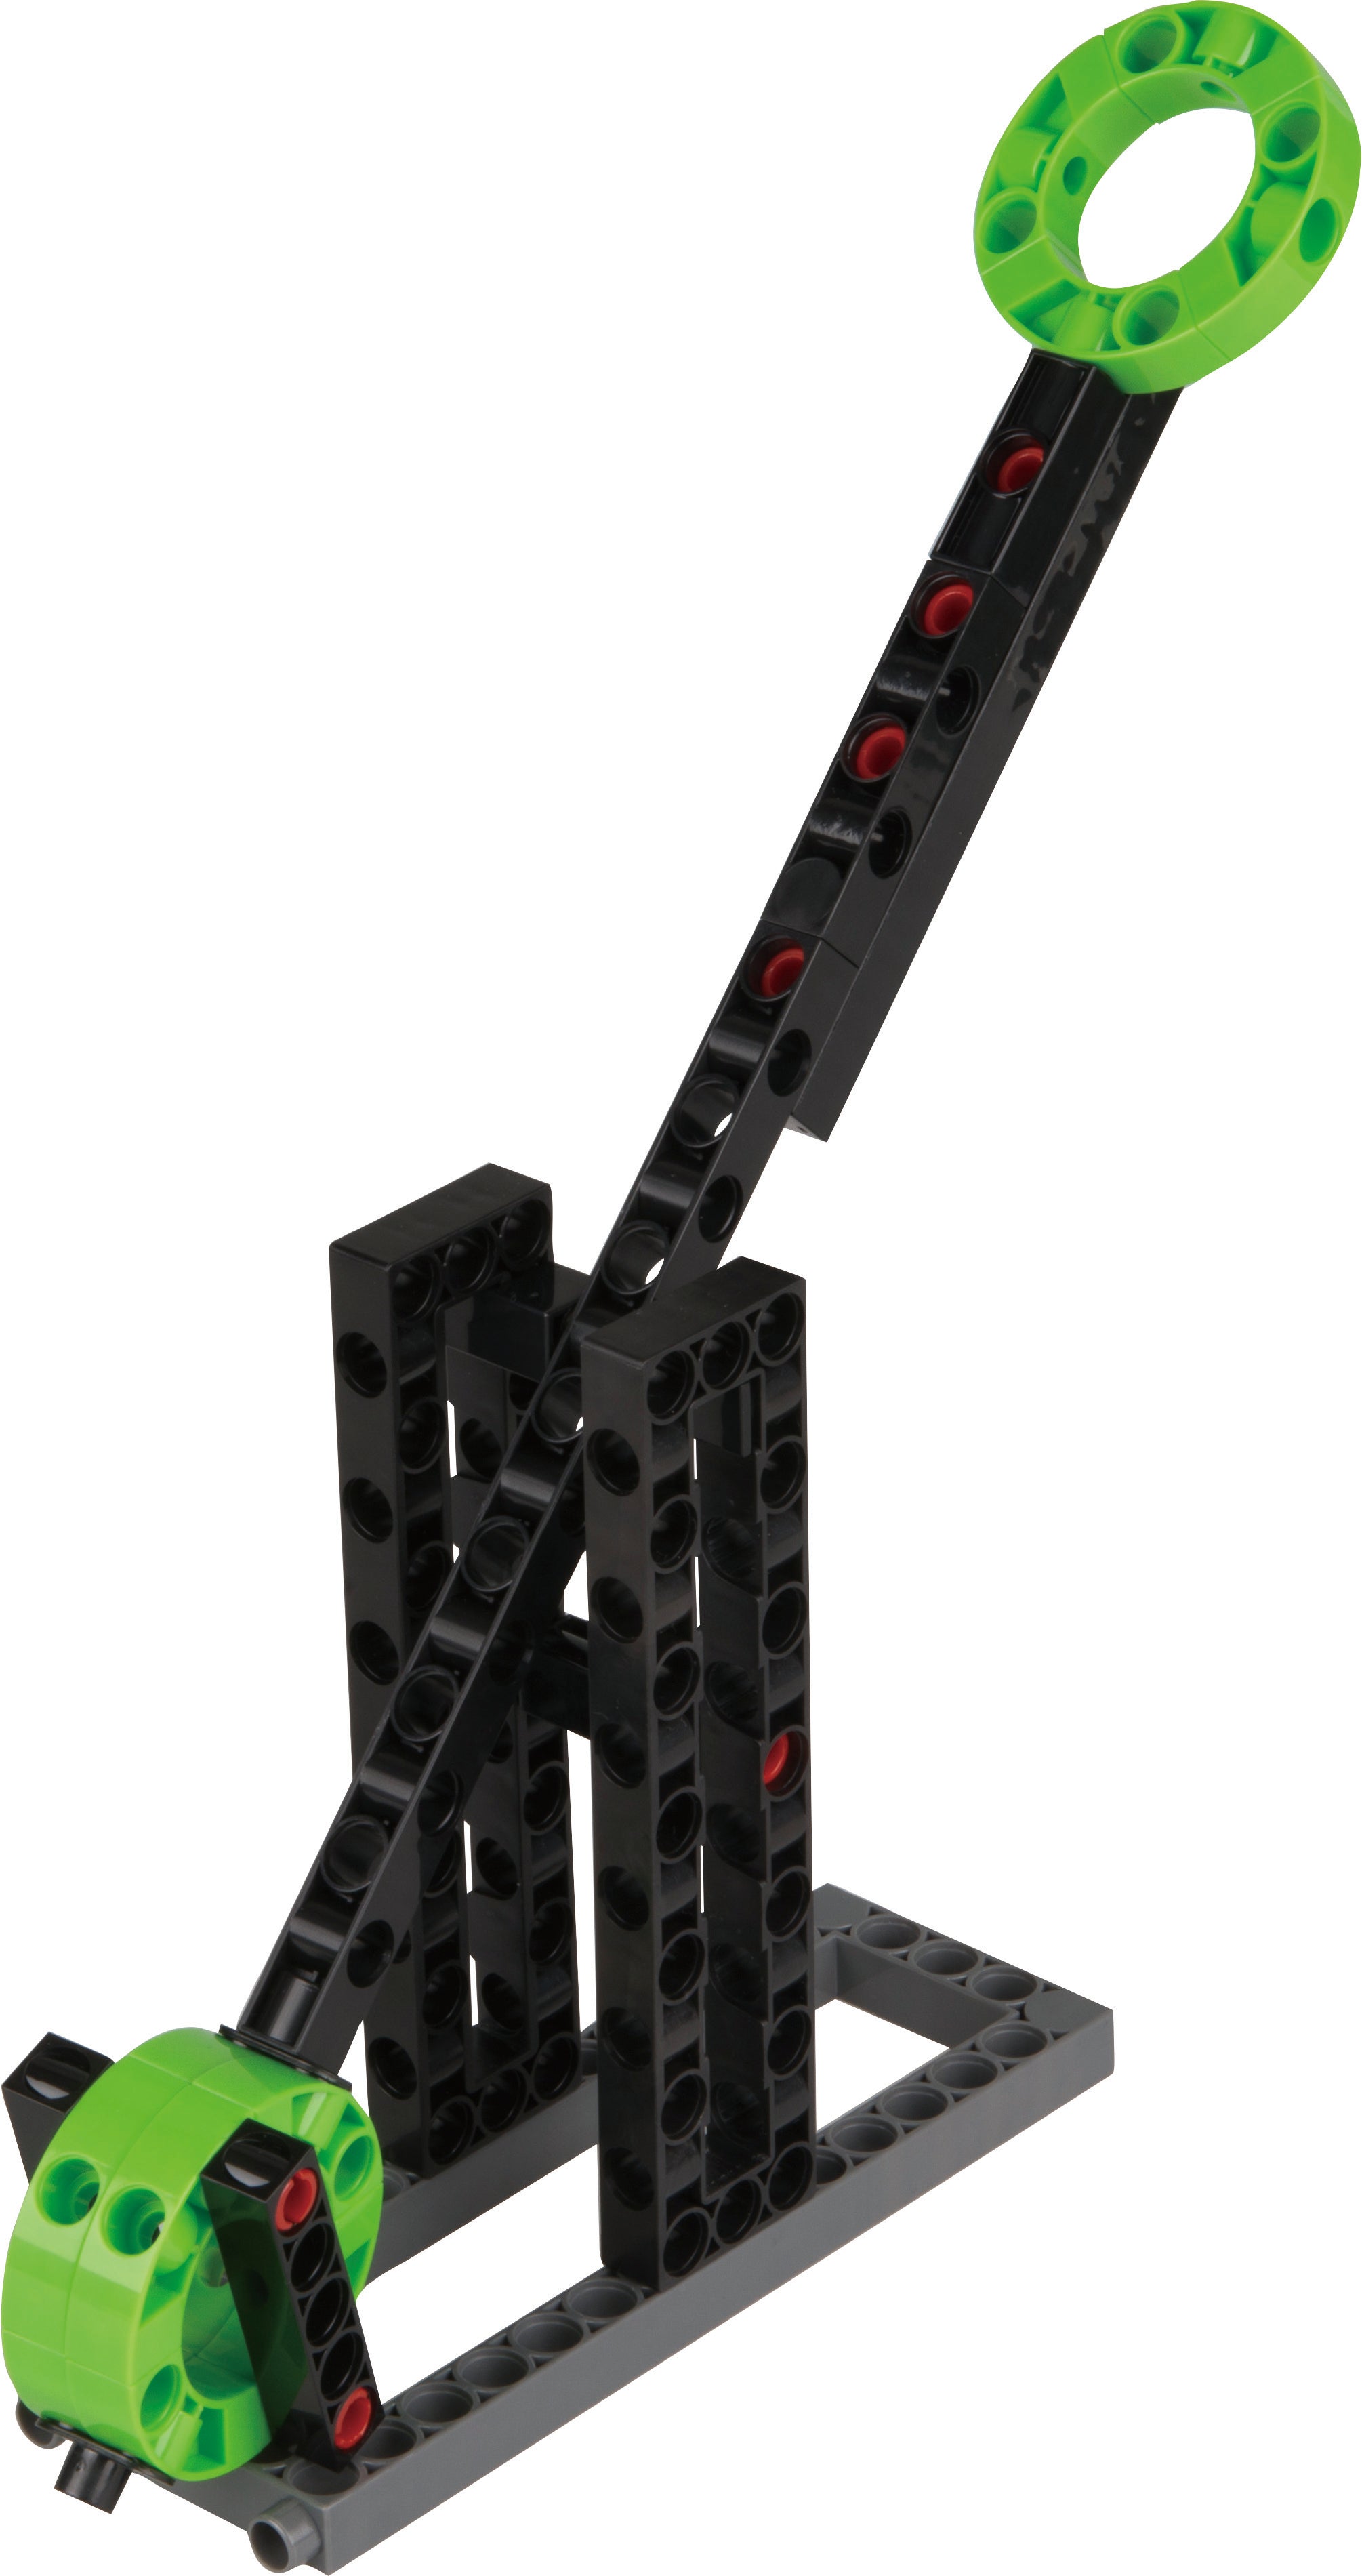 Catapults & Crossbows - Build 10 Models    